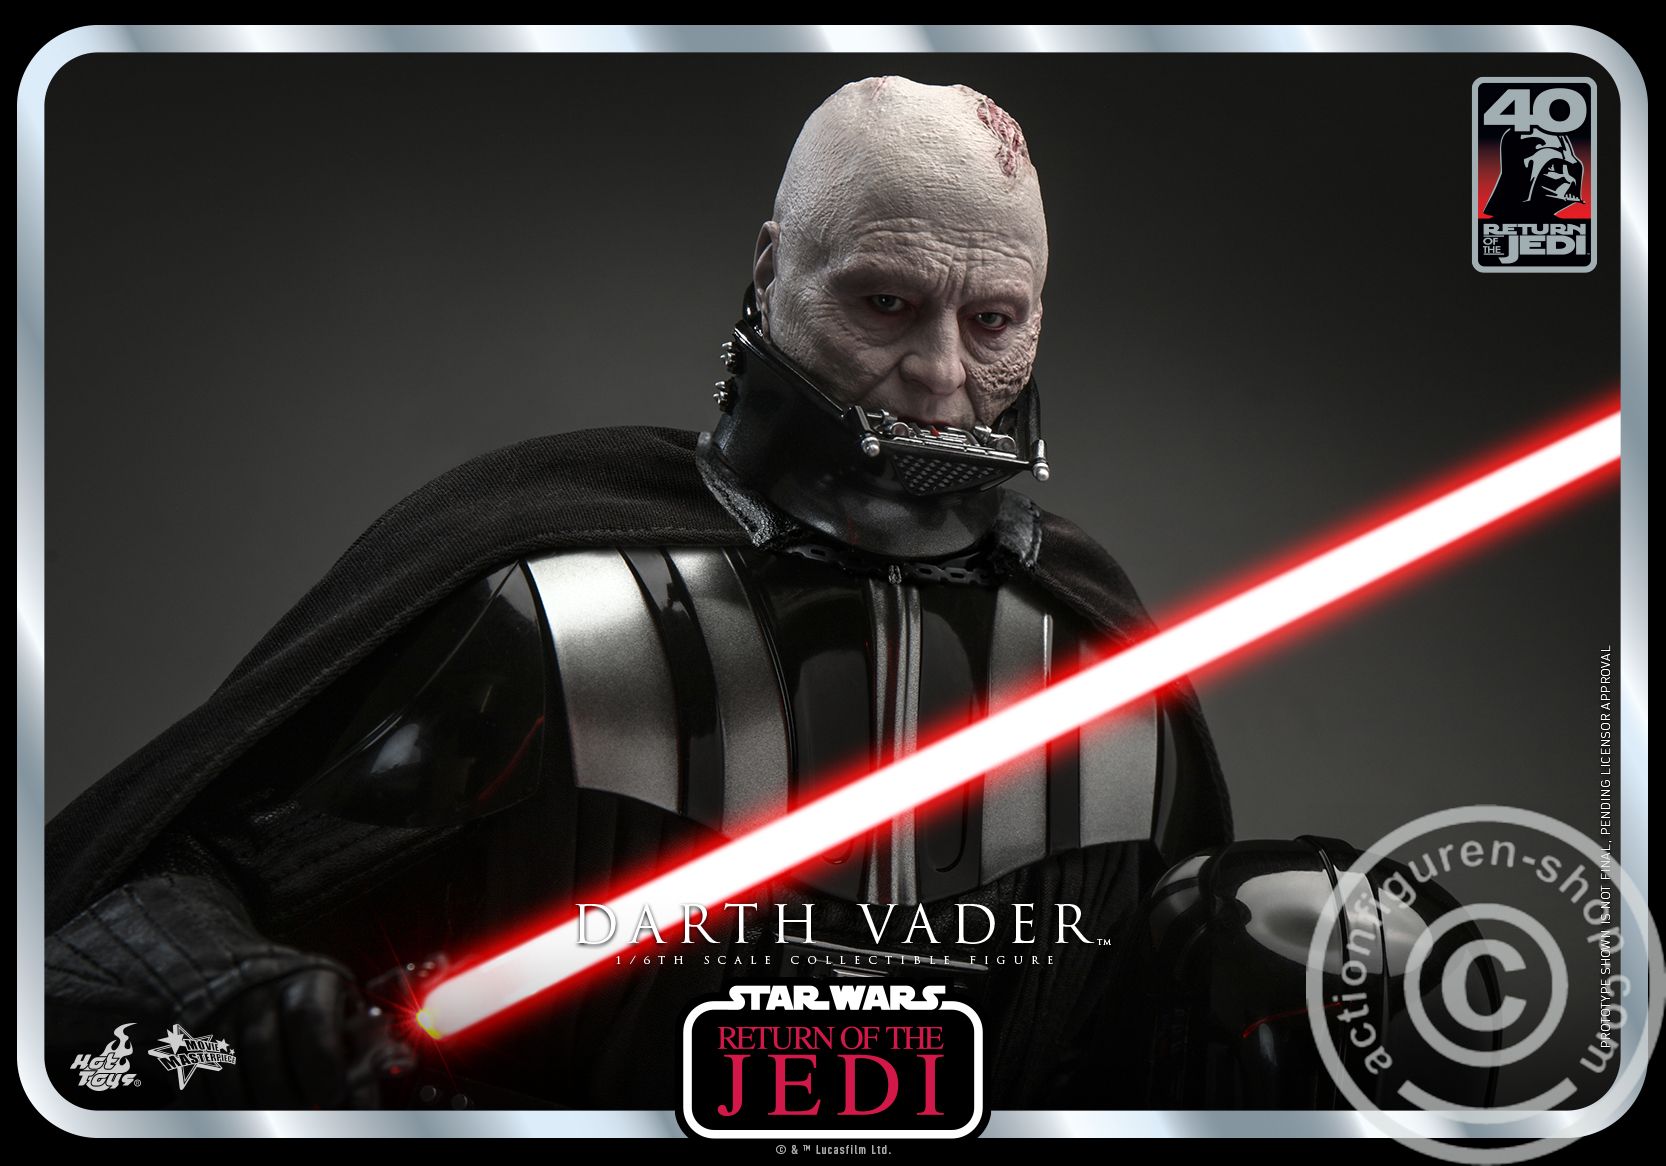 Star Wars Episode VI: Return of the Jedi - Darth Vader